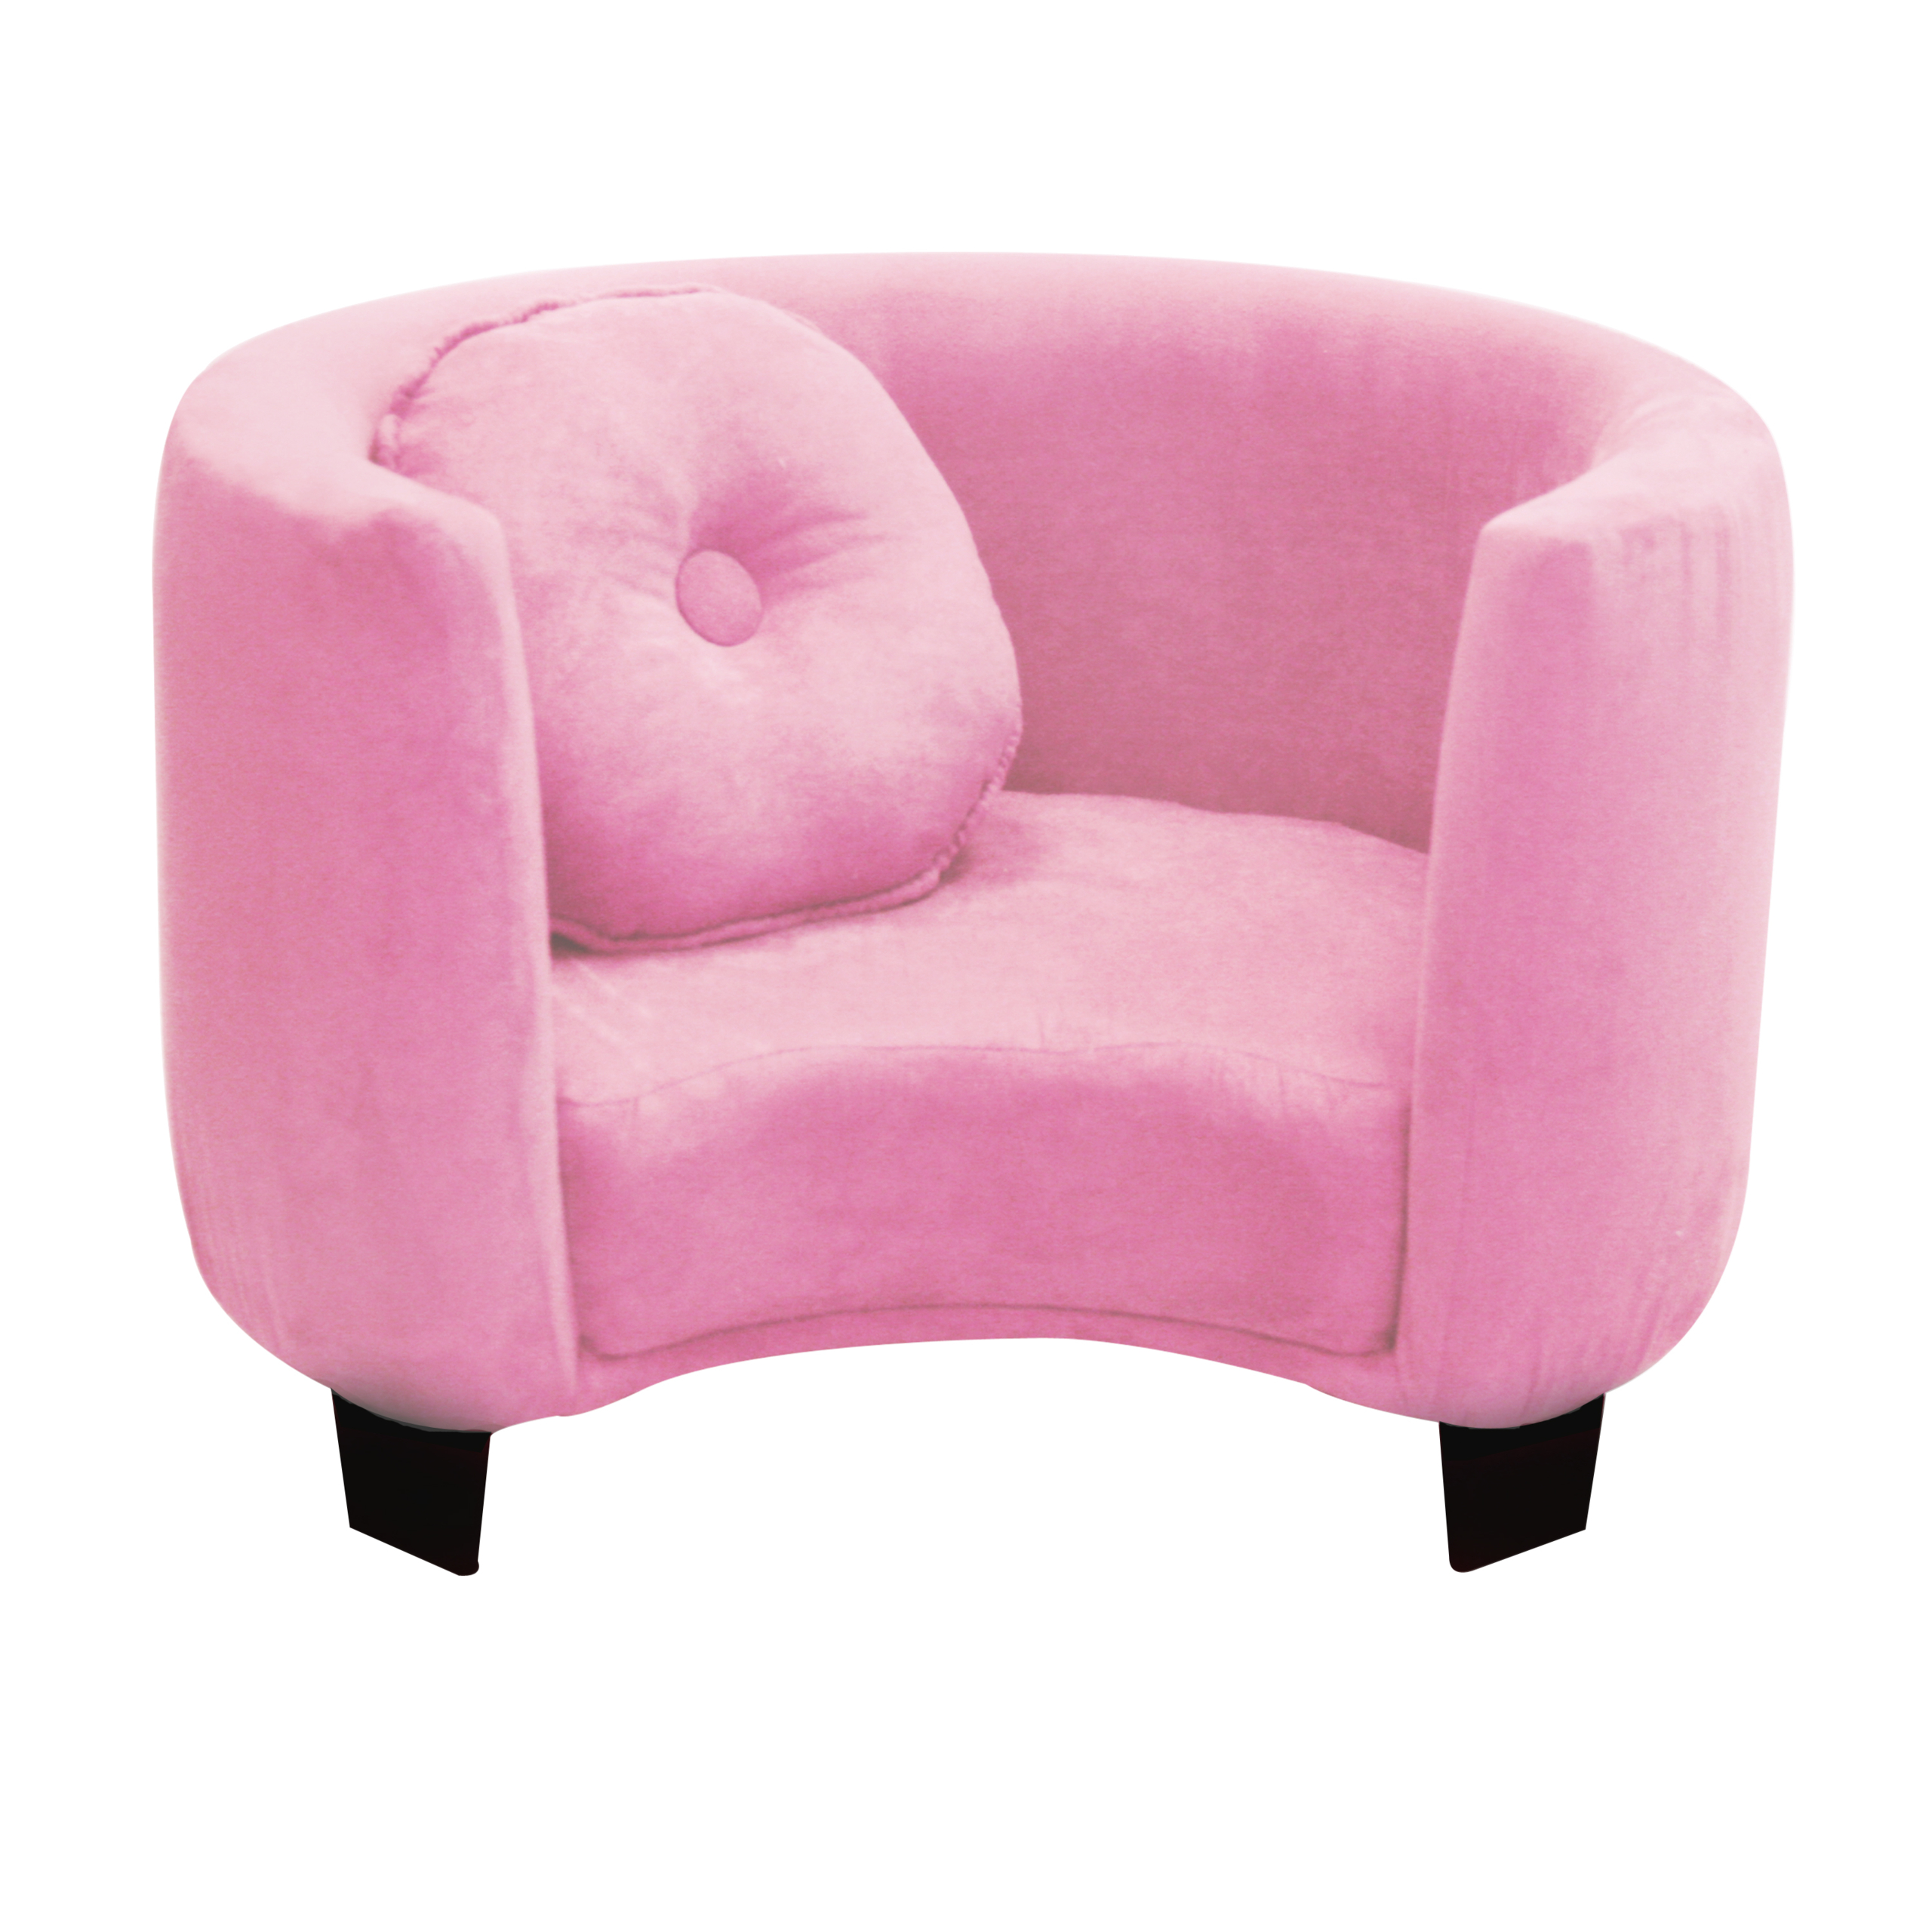 Newco Kids Comfy Micro Chair, Pink